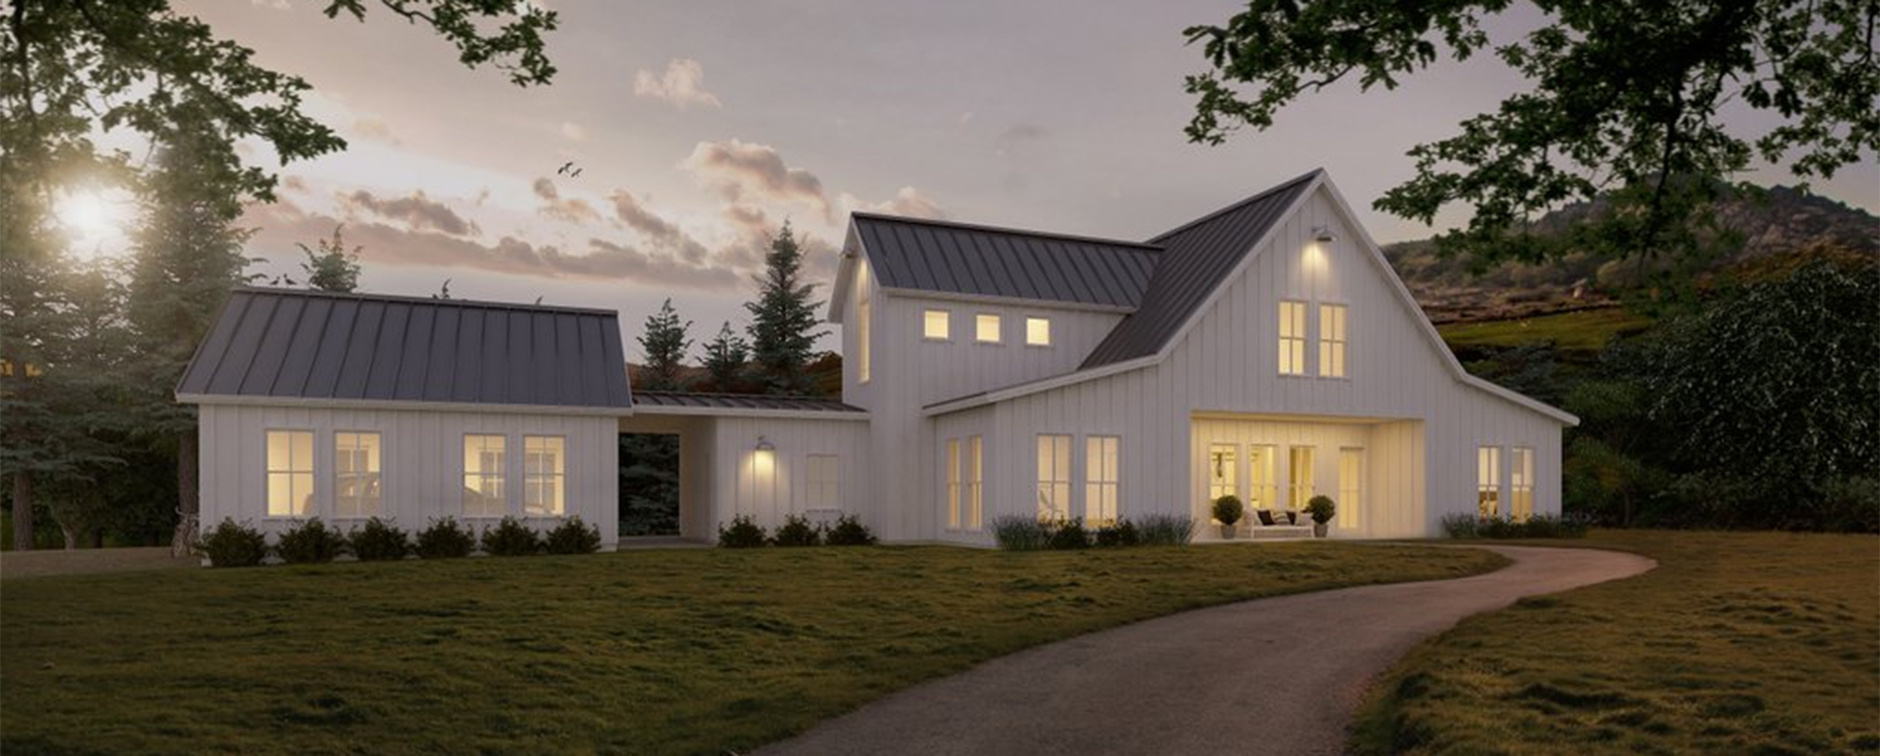 Modern Farmhouse Plans: Get the Look